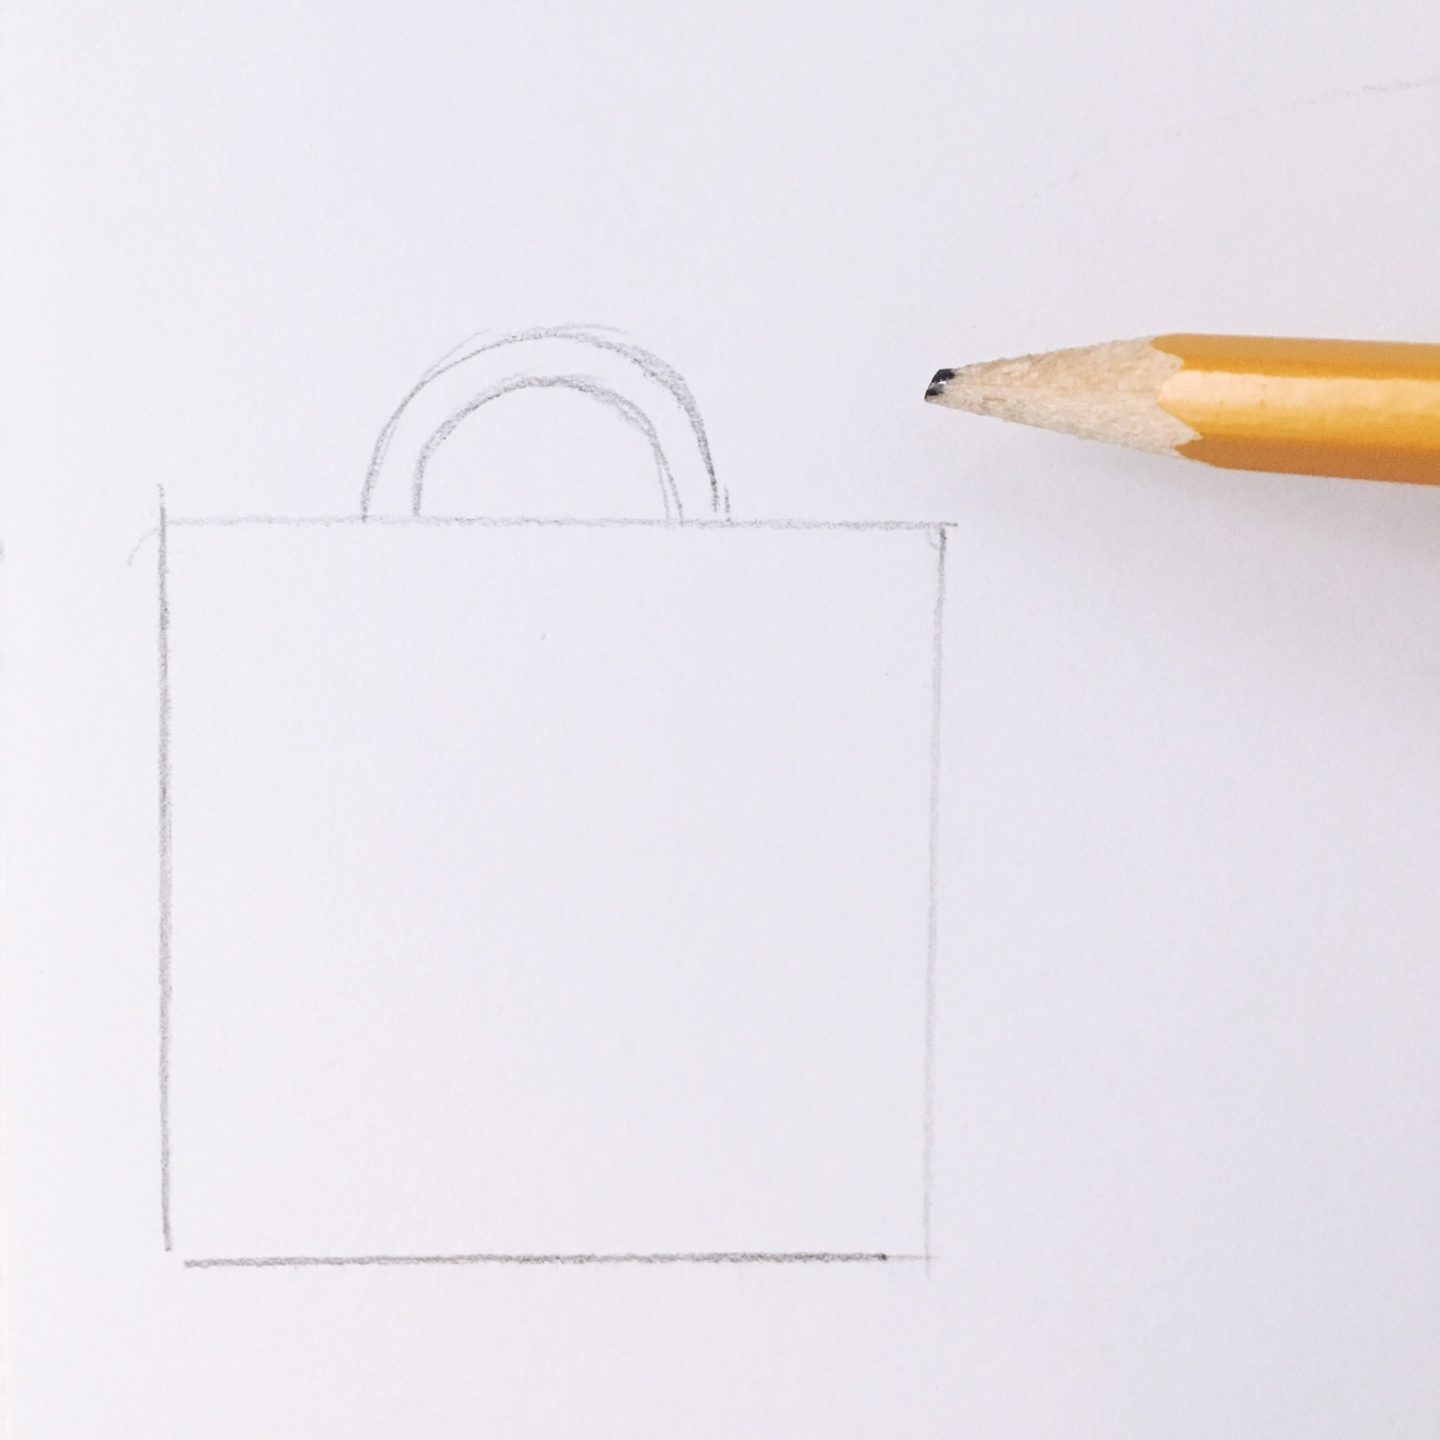 How to Draw a Bag in 3 Easy Steps Lola Glenn